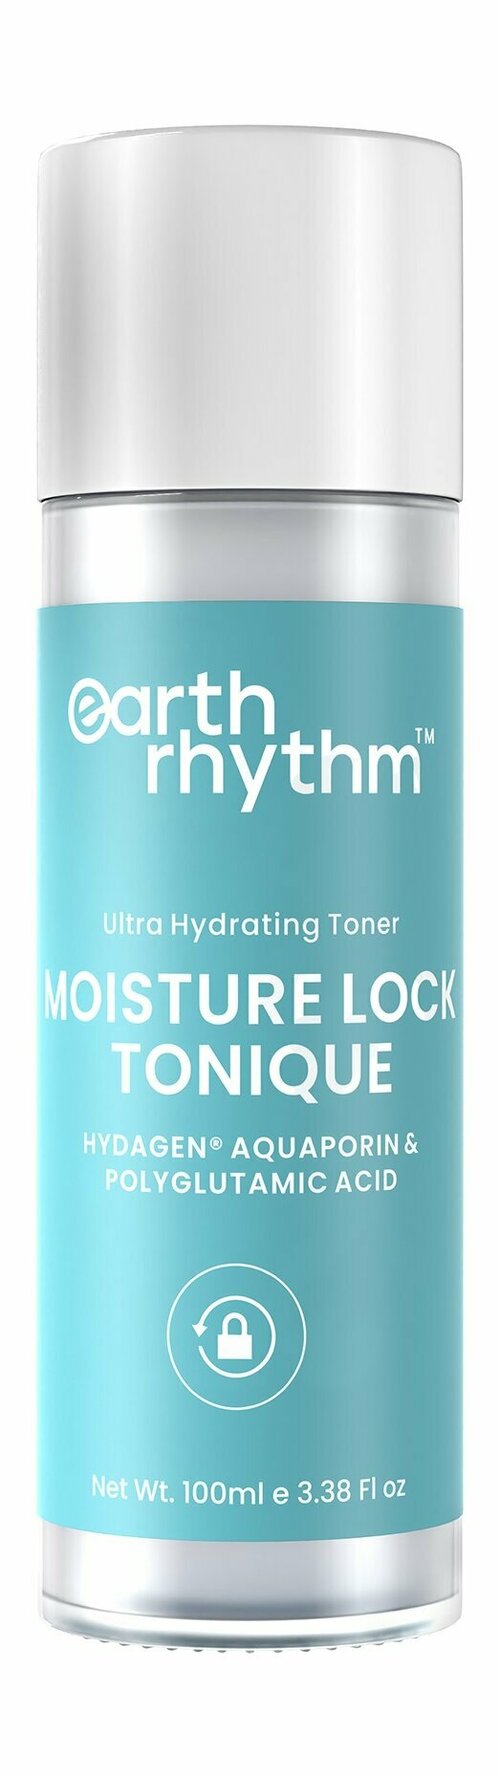 EARTH RHYTHM Moisture Lock Tonique Тоник для лица увлажняющий с Hydagen Aquaporin, 100 мл